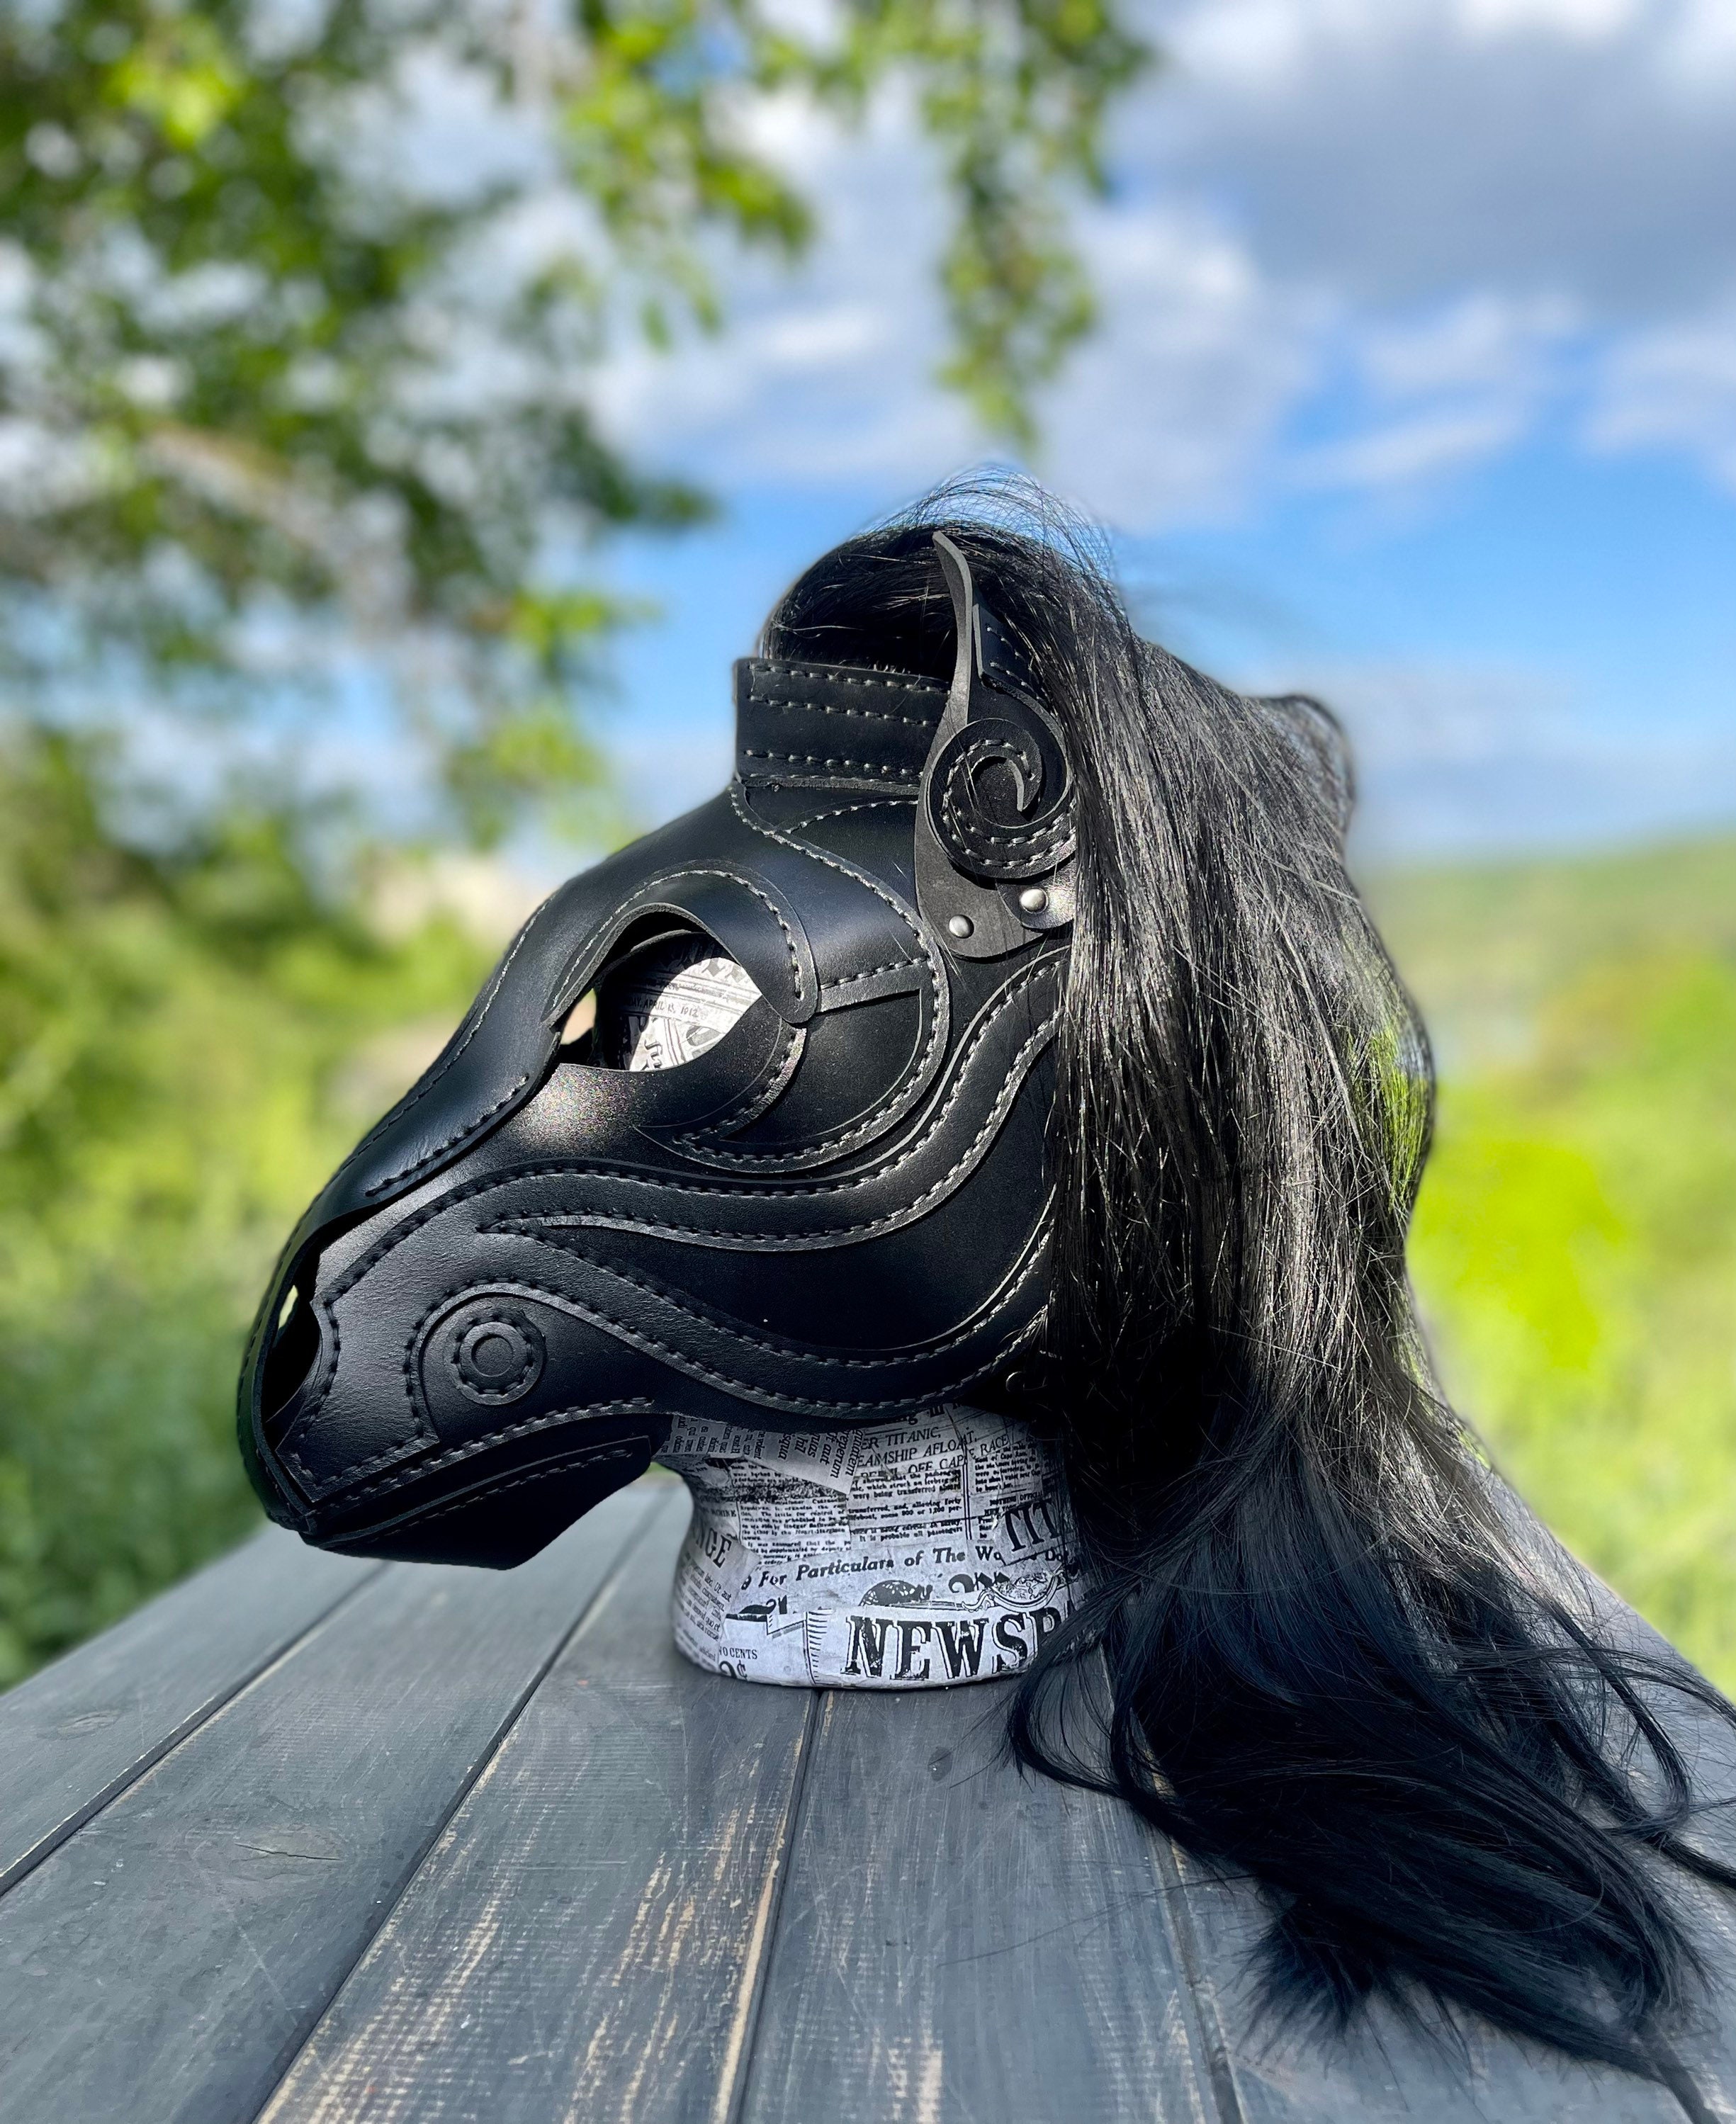 Pig Head Mask Therian Animal Latex Mascara Furry Horse Donkey